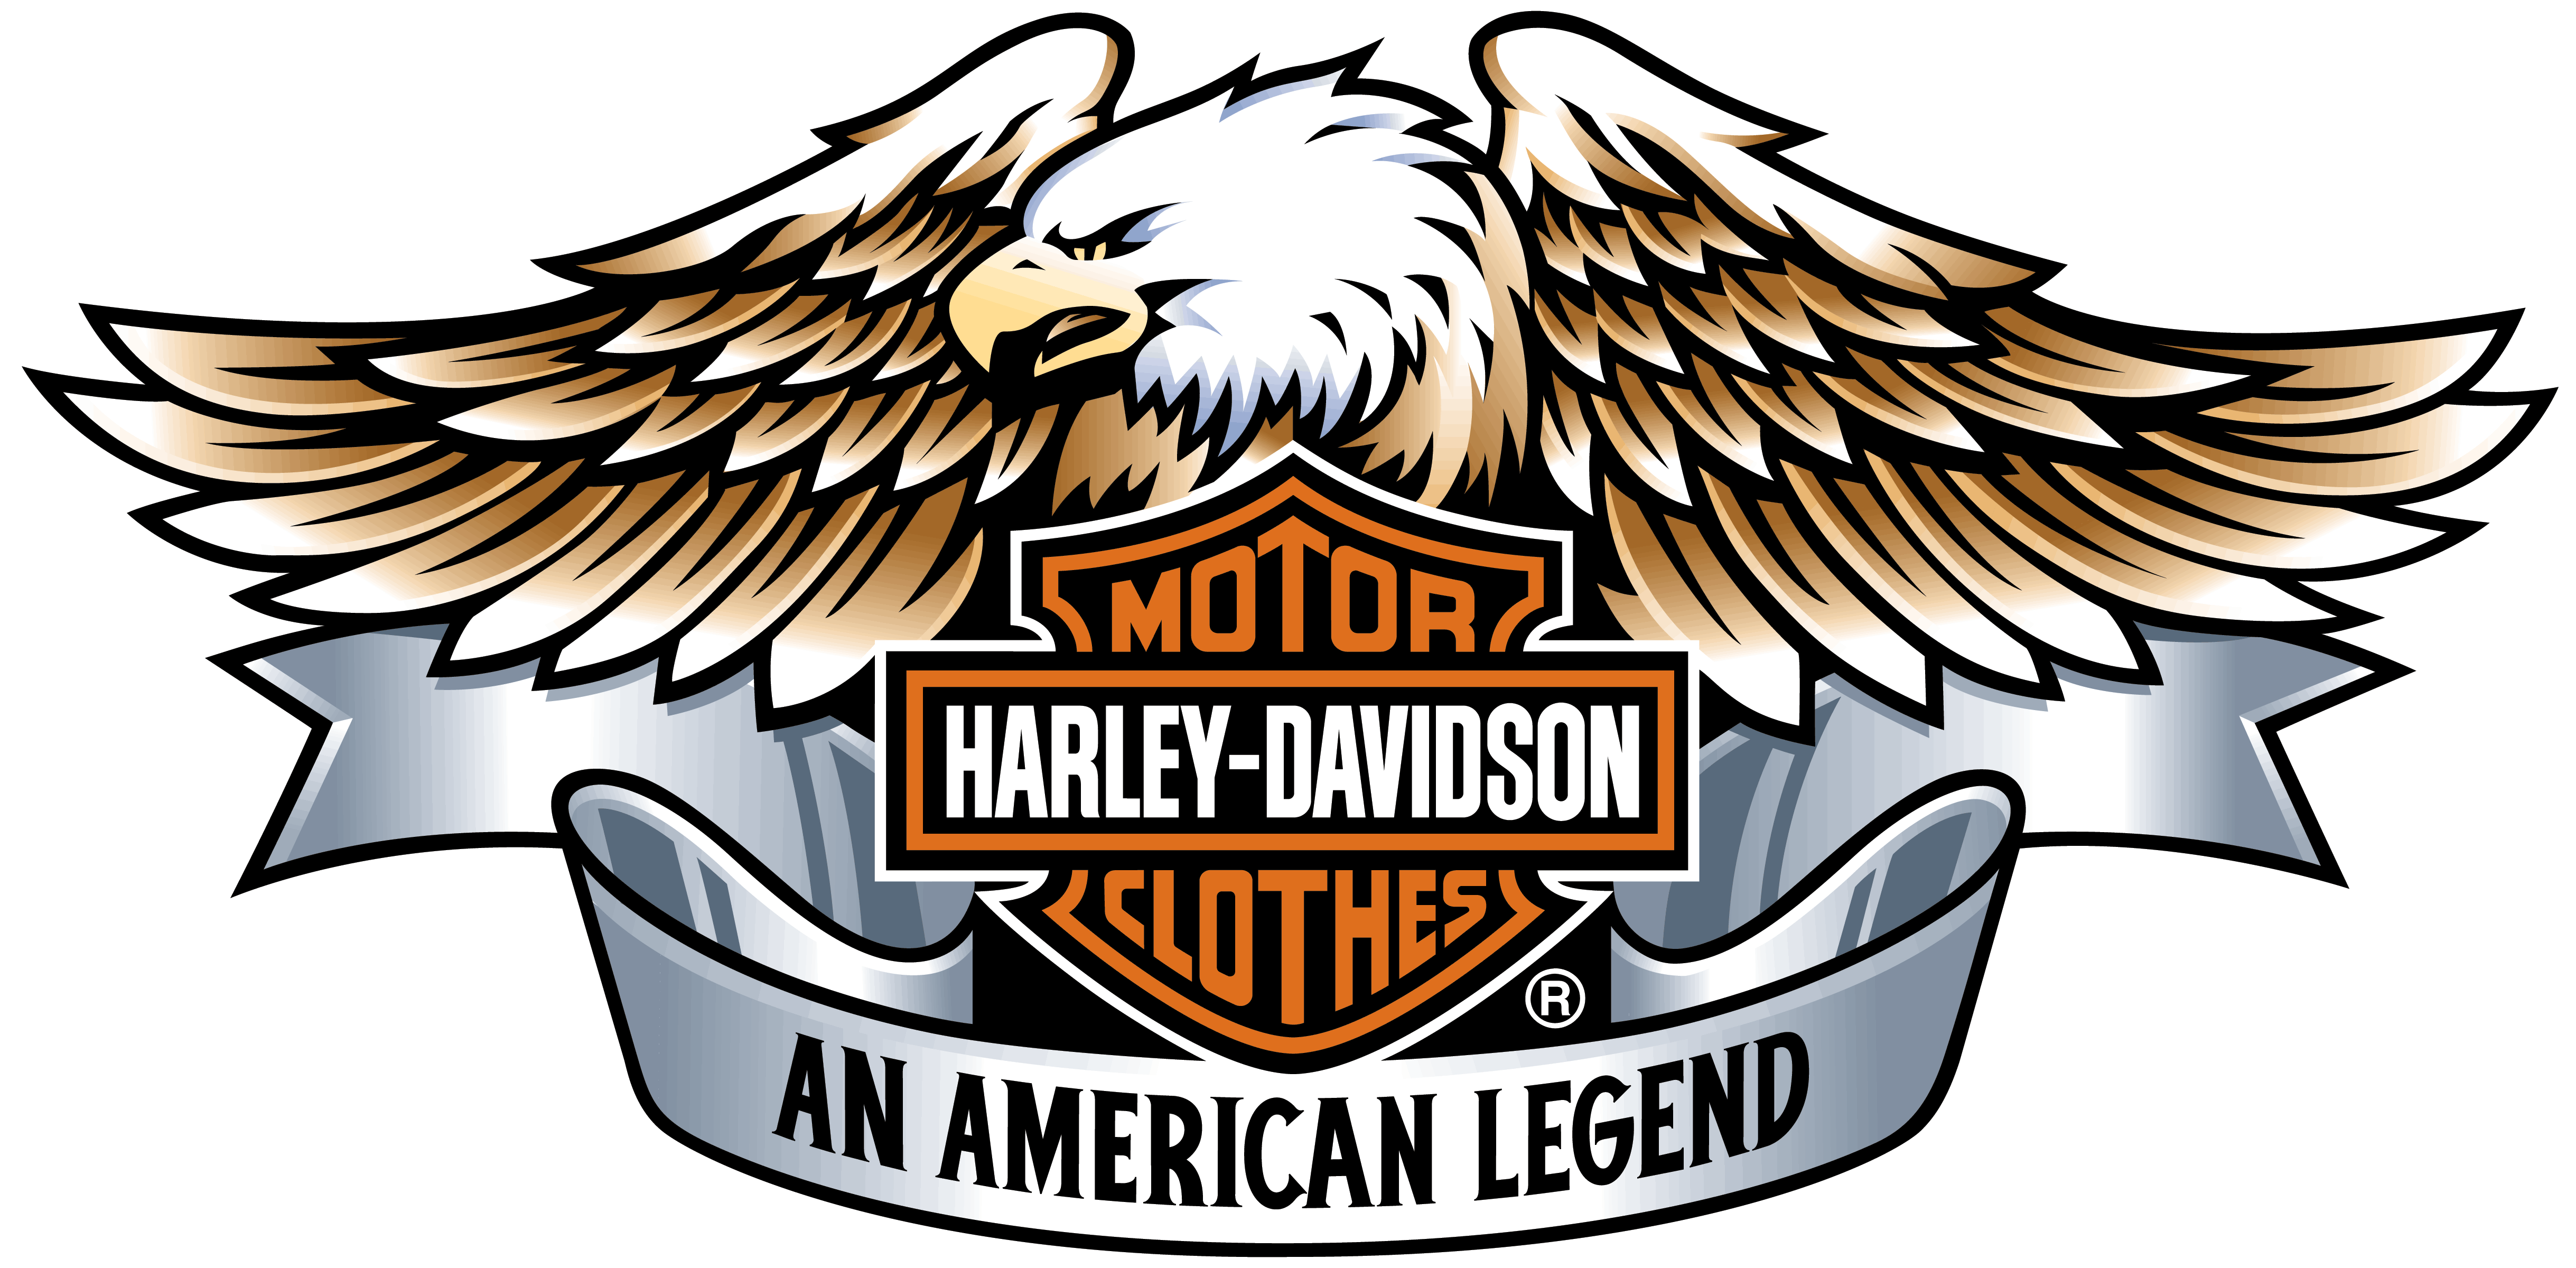 Harley Davidson Dealership Announced Its Facilities as Meeting ...